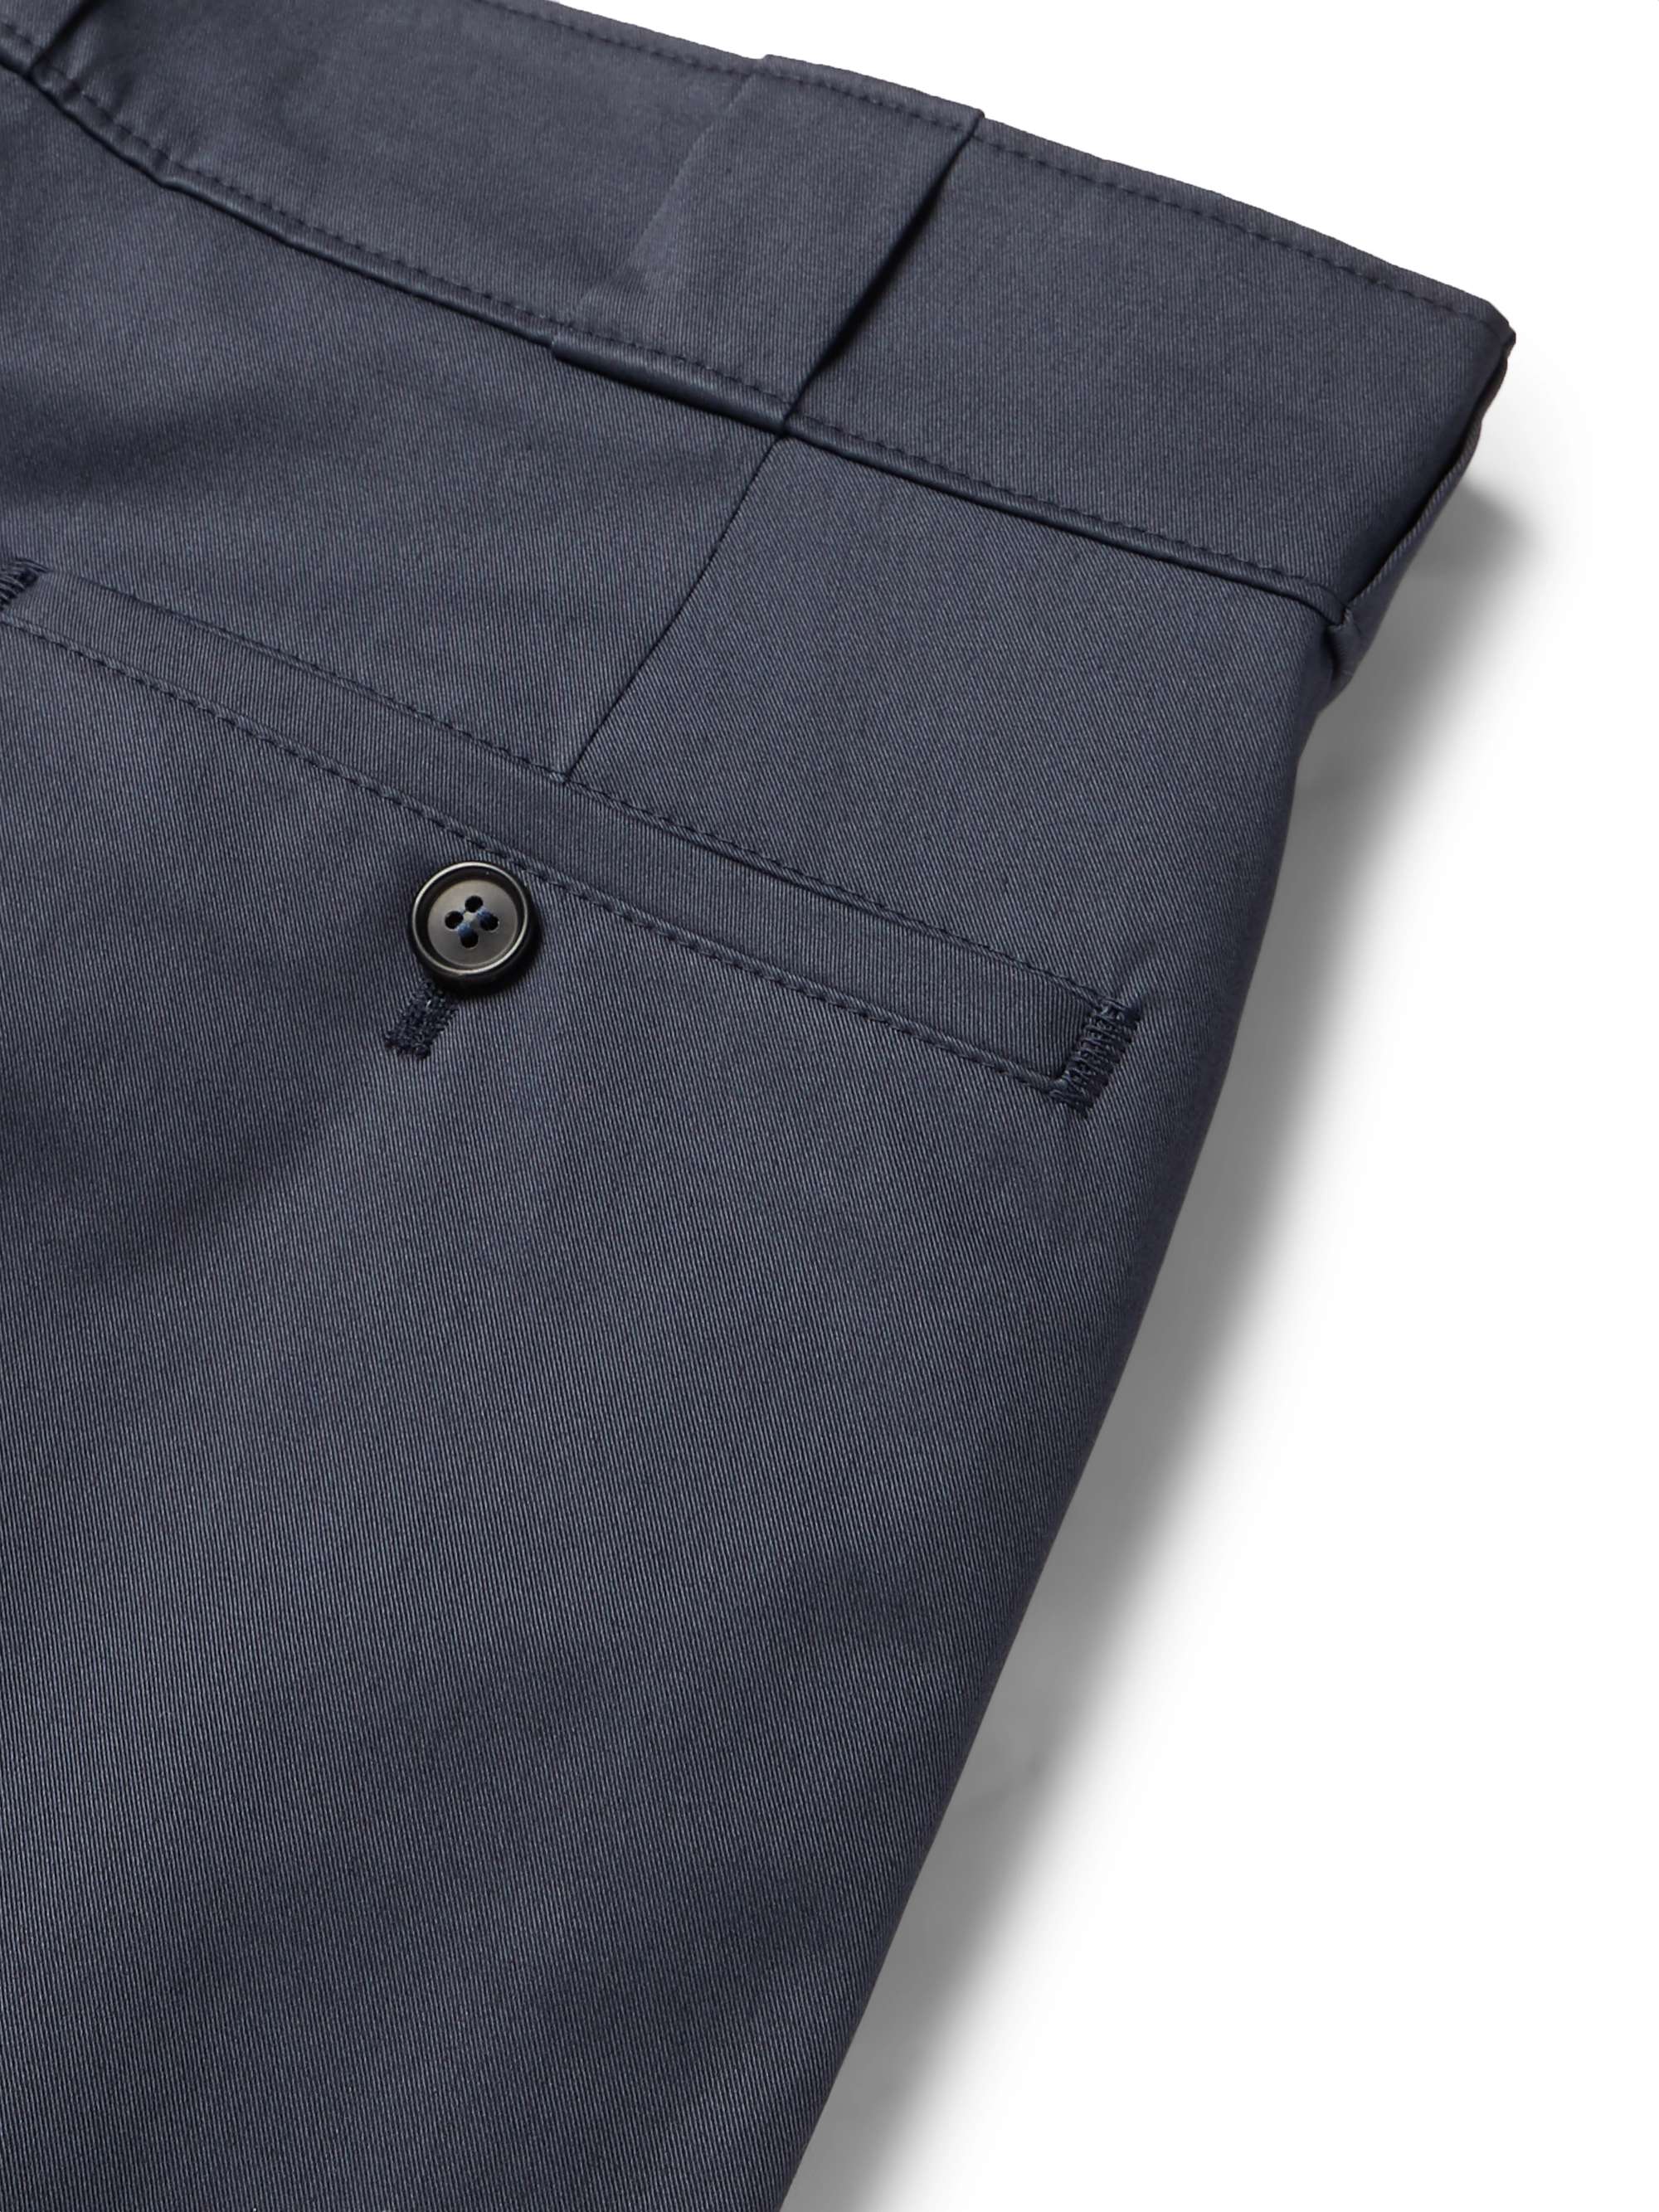 PRADA Slim-Fit Cotton-Blend Gabardine Chino Shorts